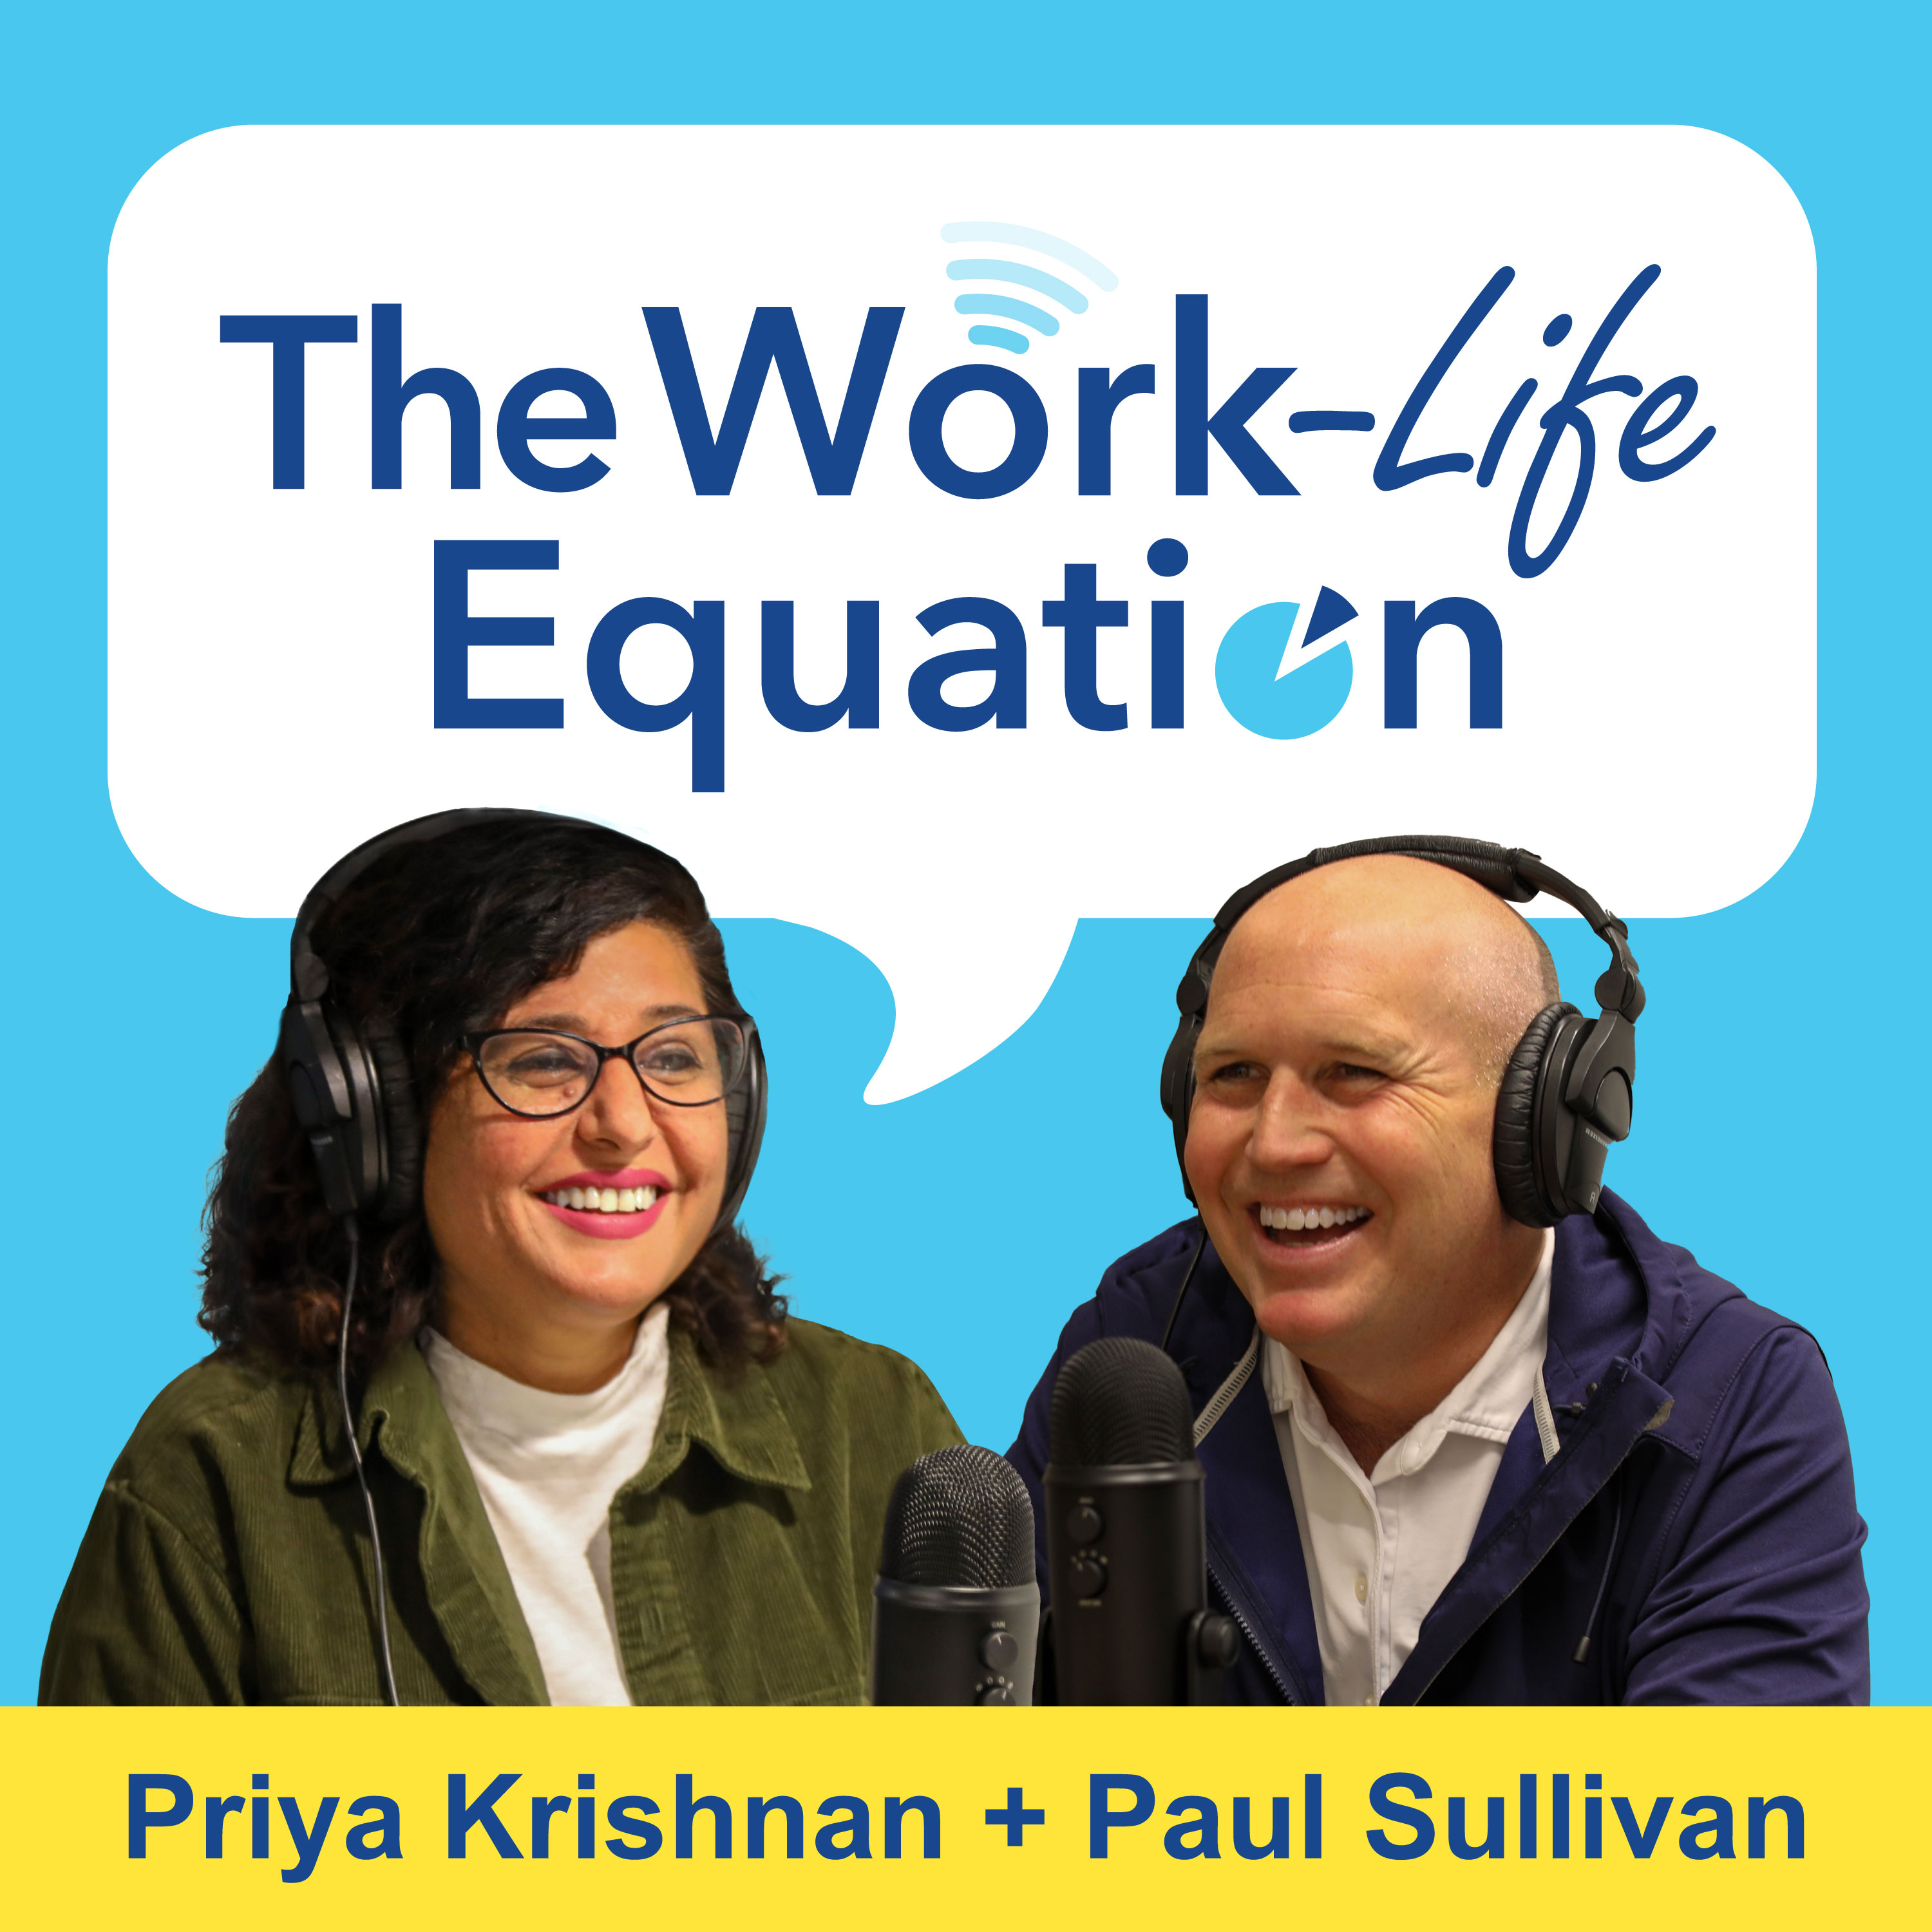 Priya Krishnan and Paul Sullivan